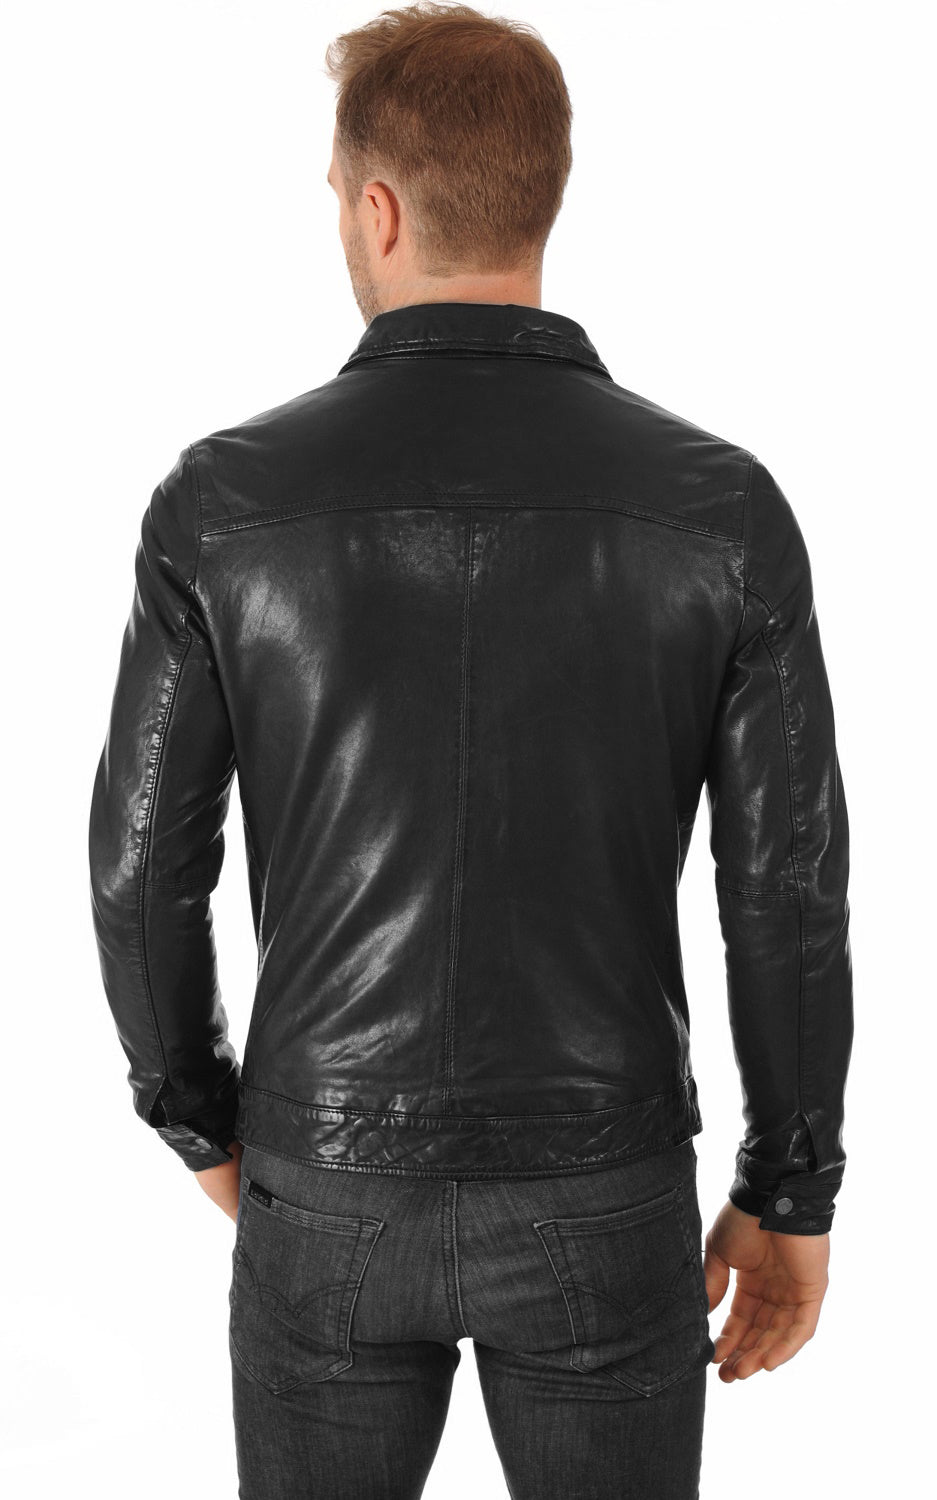 Men Genuine Leather Jacket MJ 45 SkinOutfit